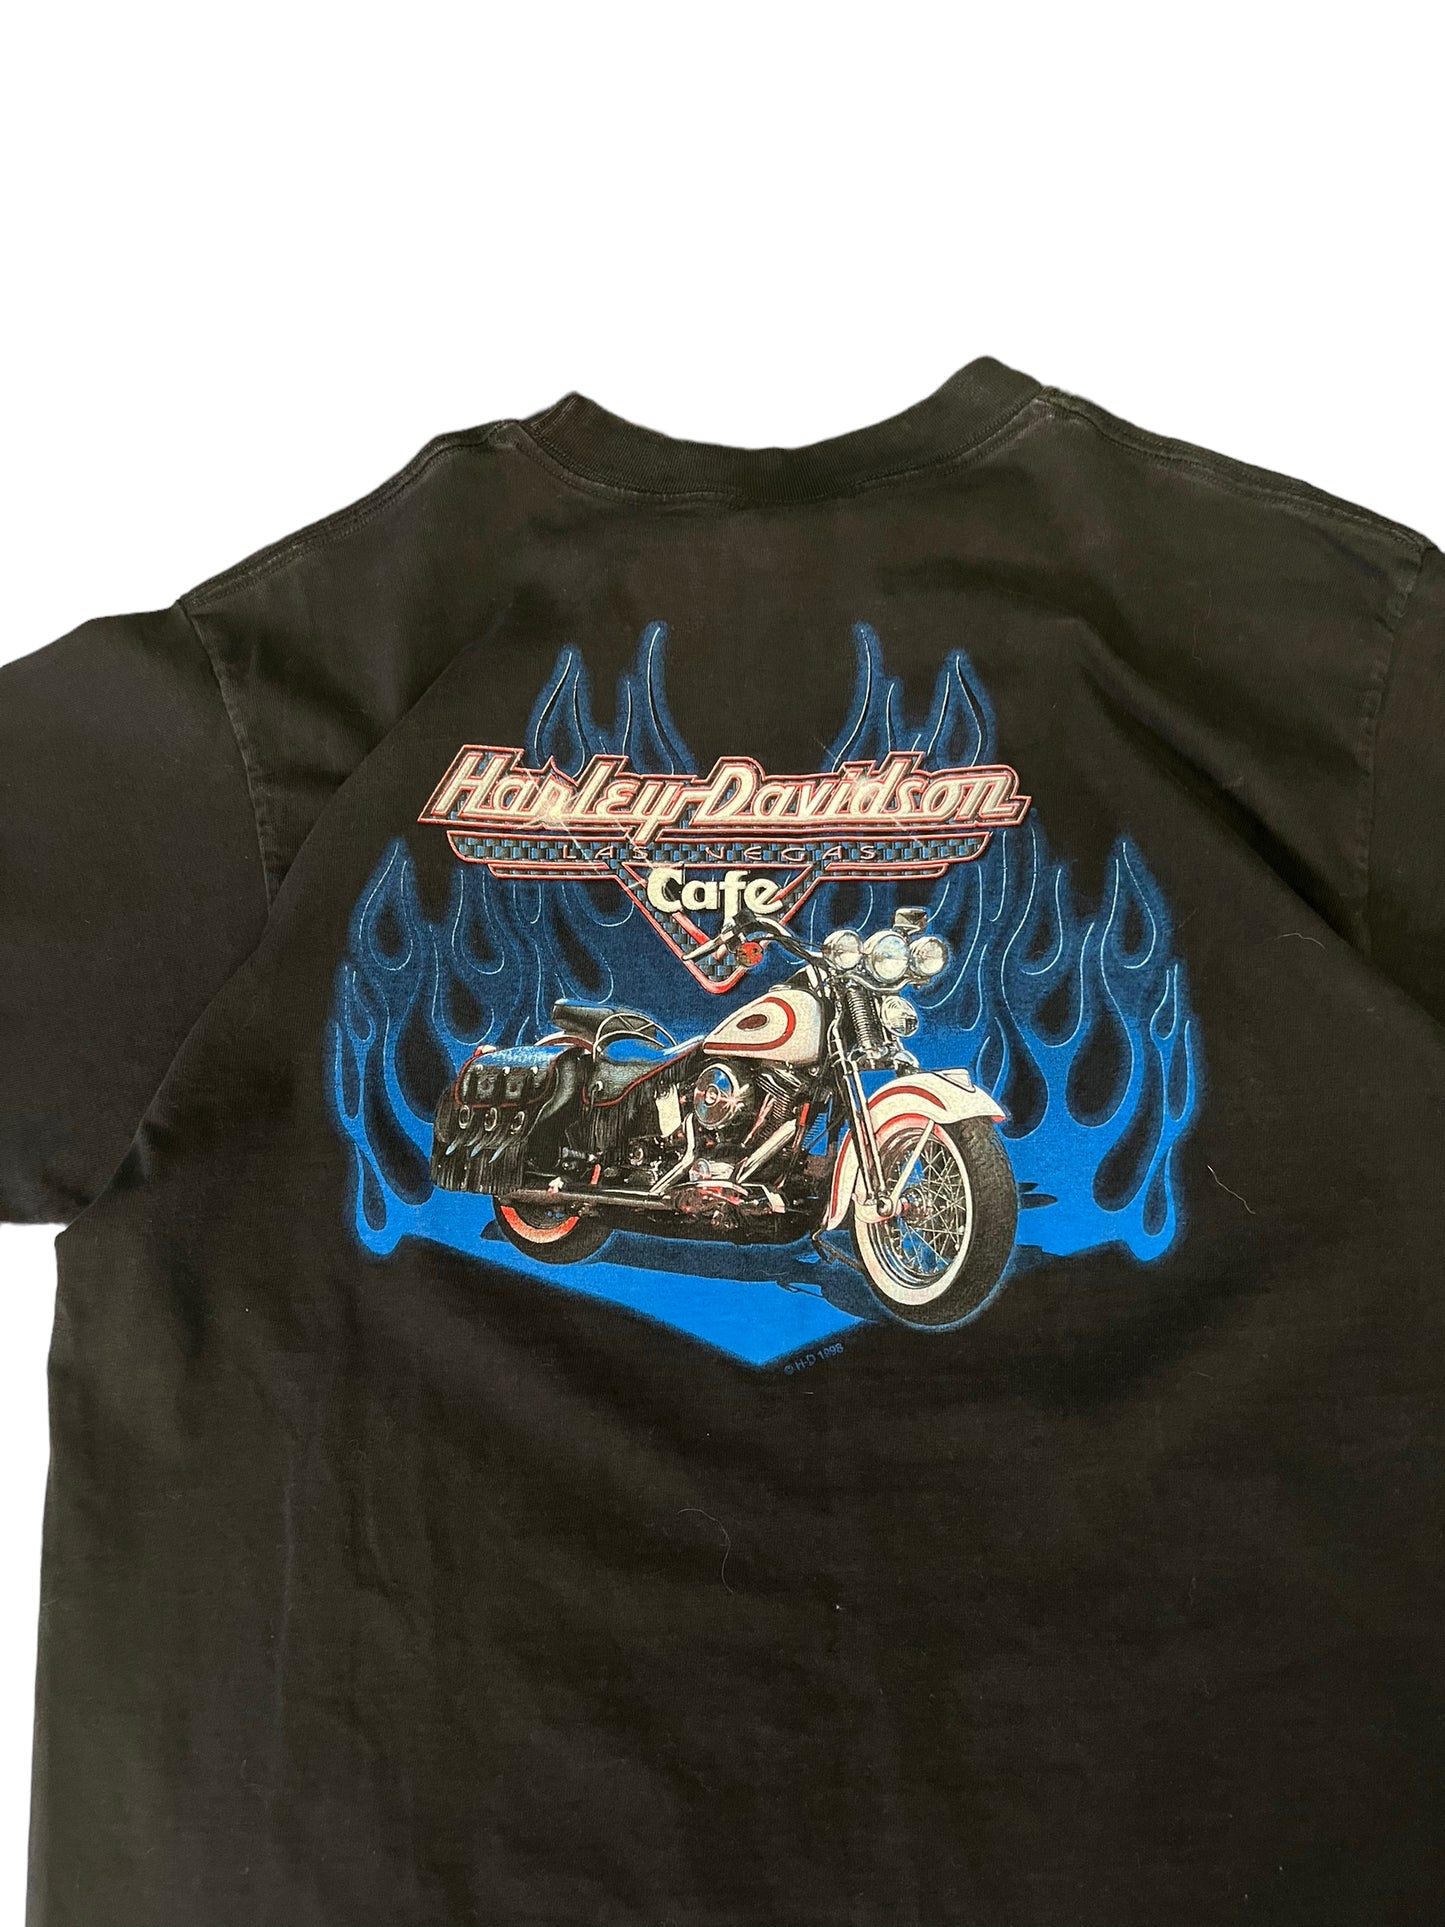 (L) 1998 Harley Davidson Las Vegas Double Sided Pocket Tee